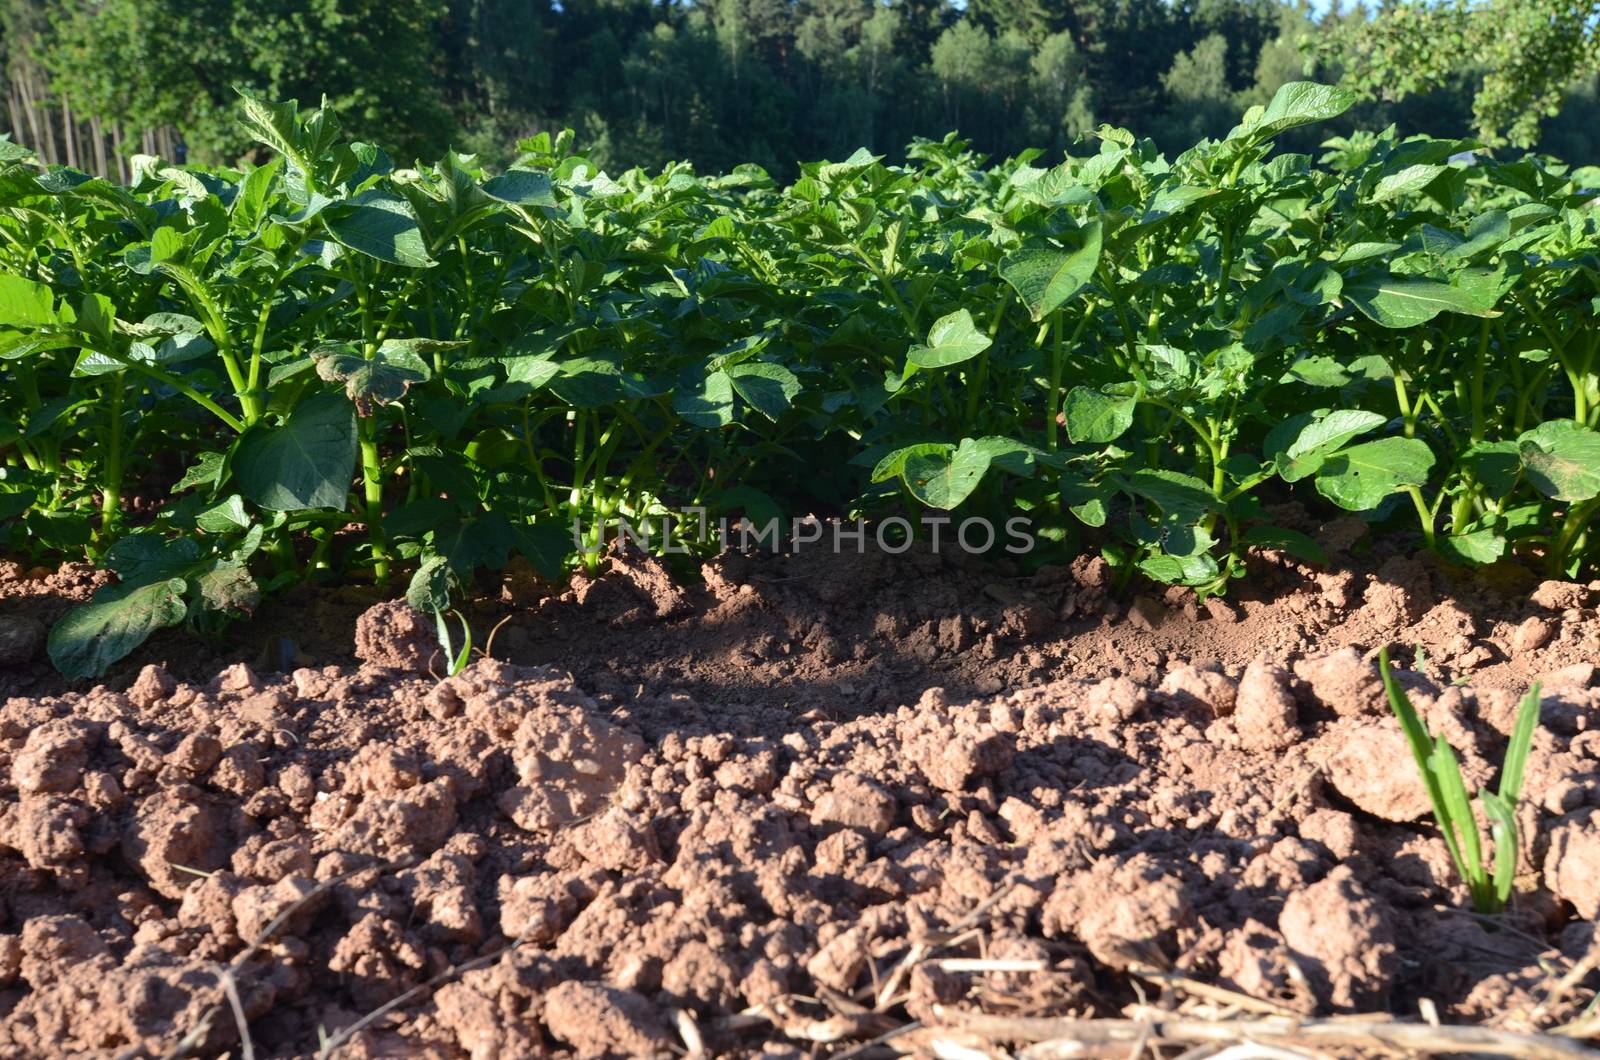 potato field by sarkao